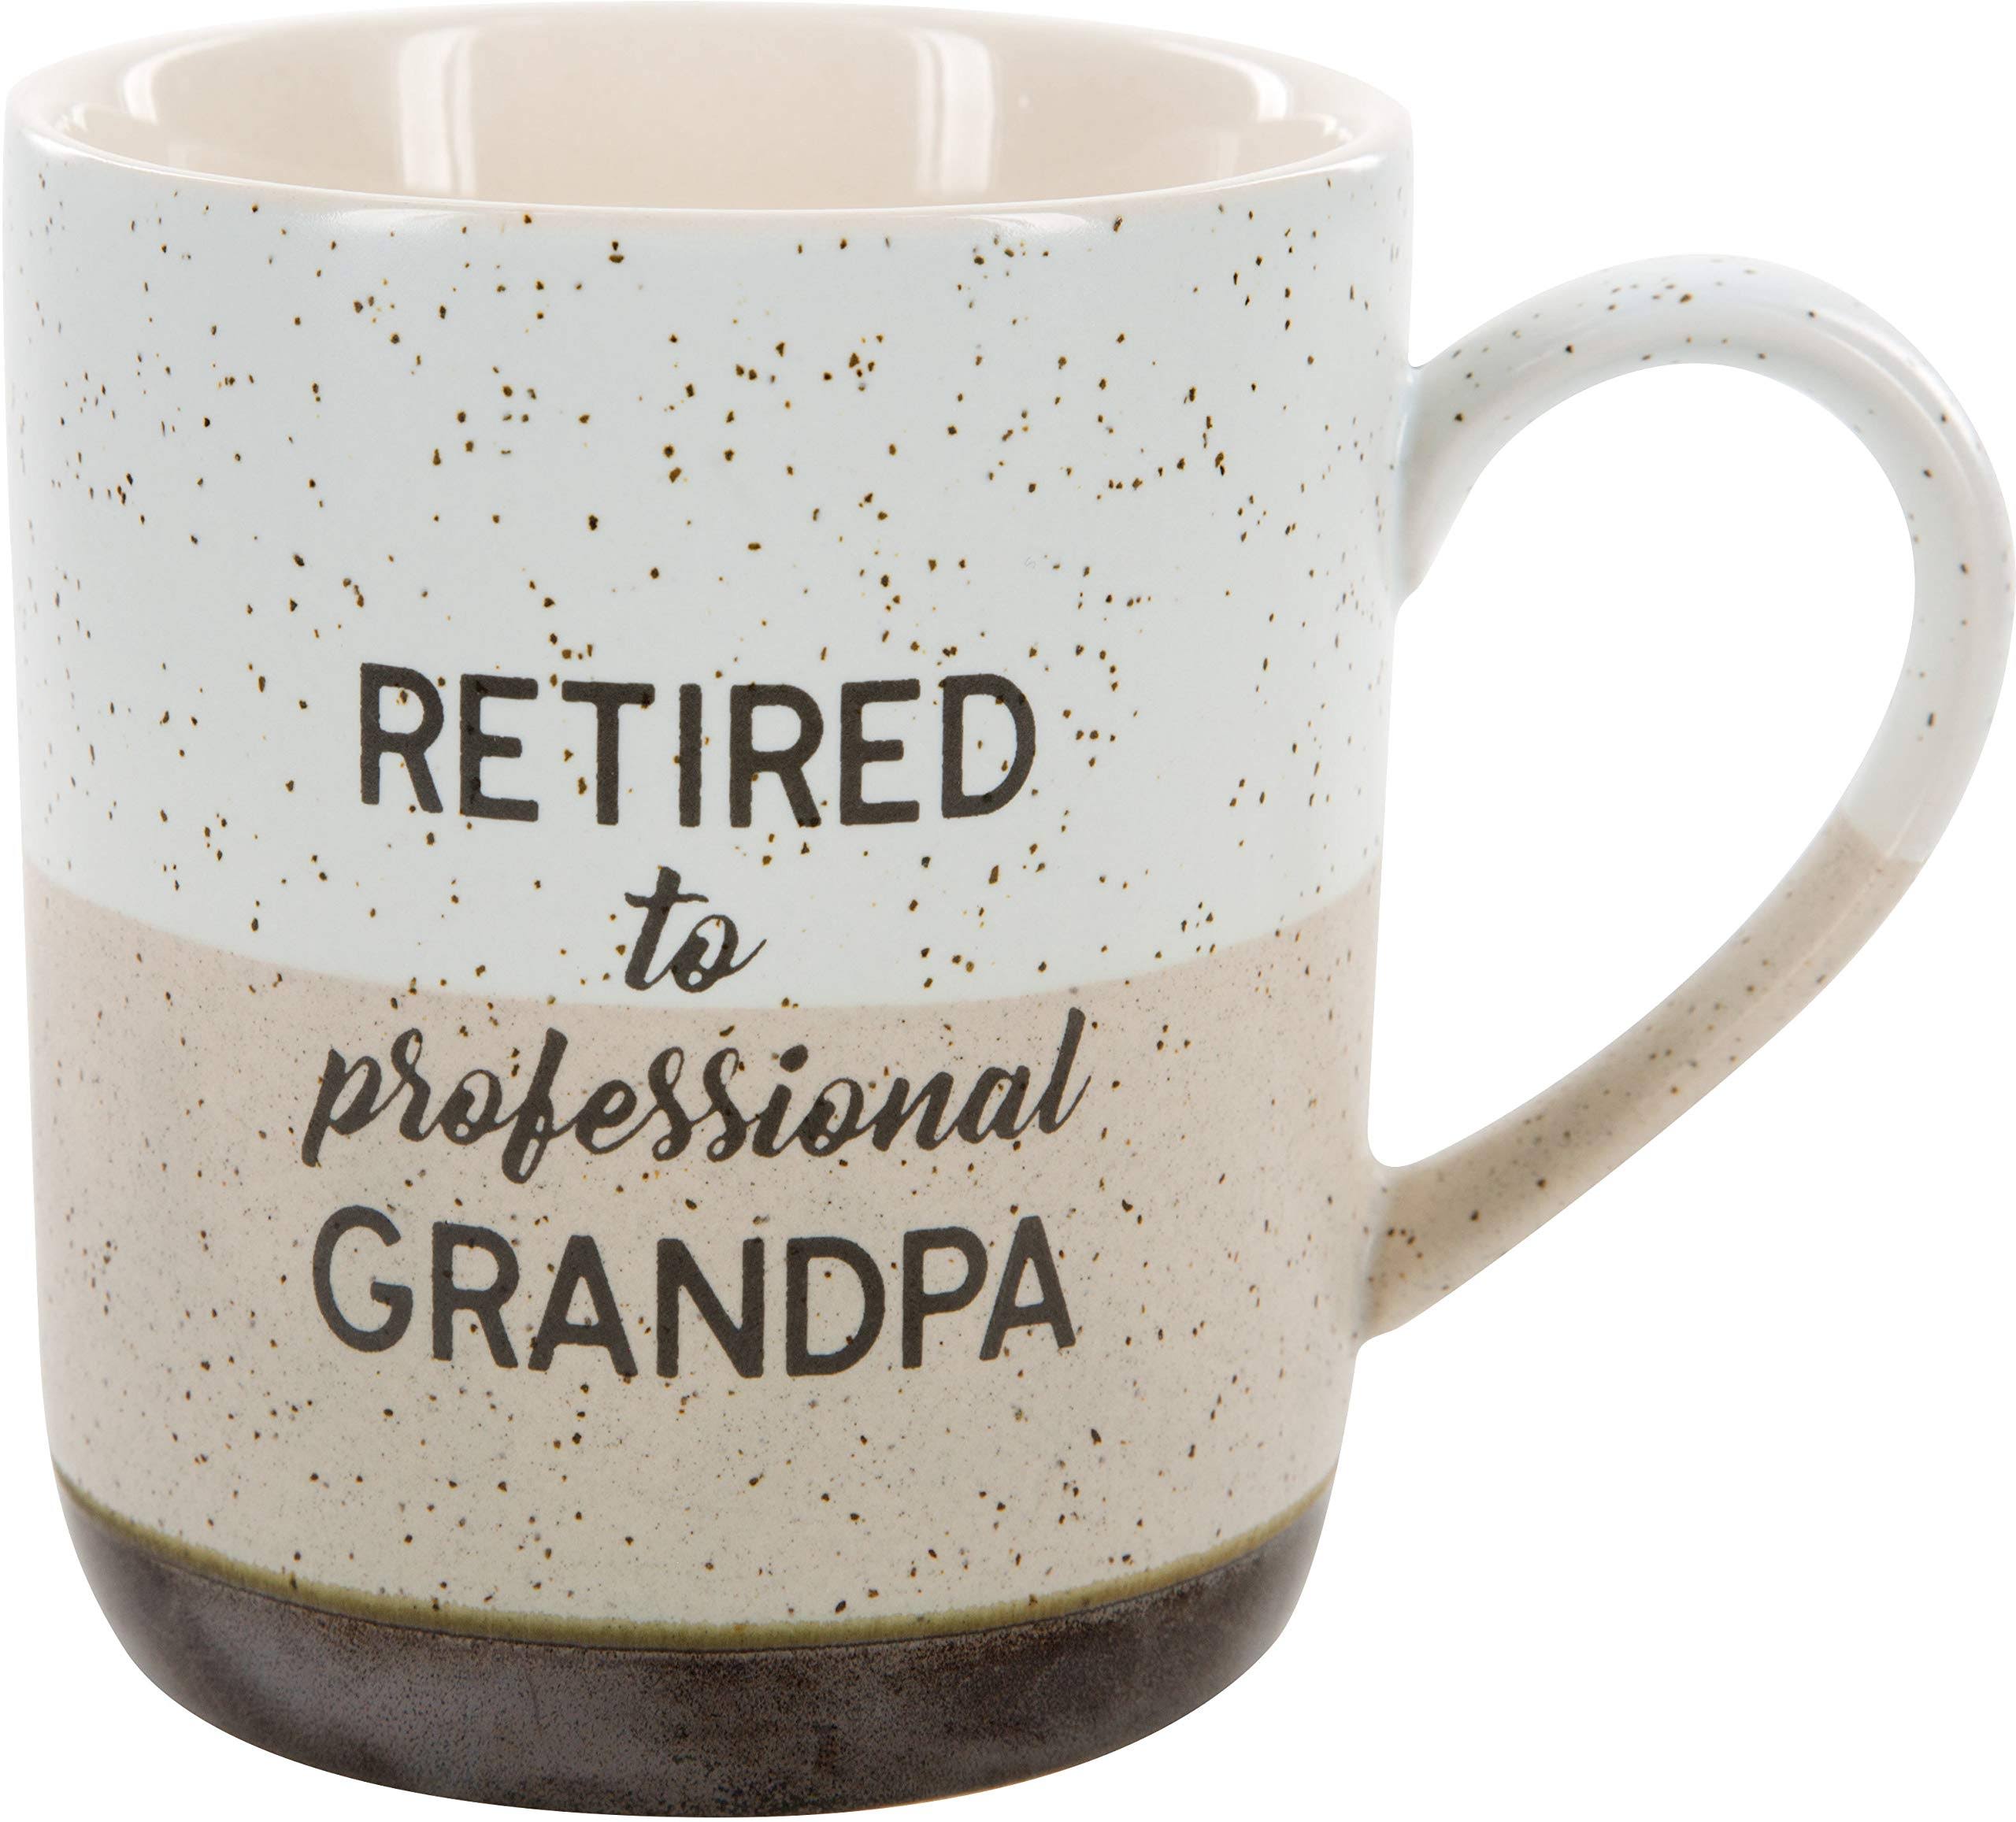 Retired to Professional Grandpa Mug 15 oz.